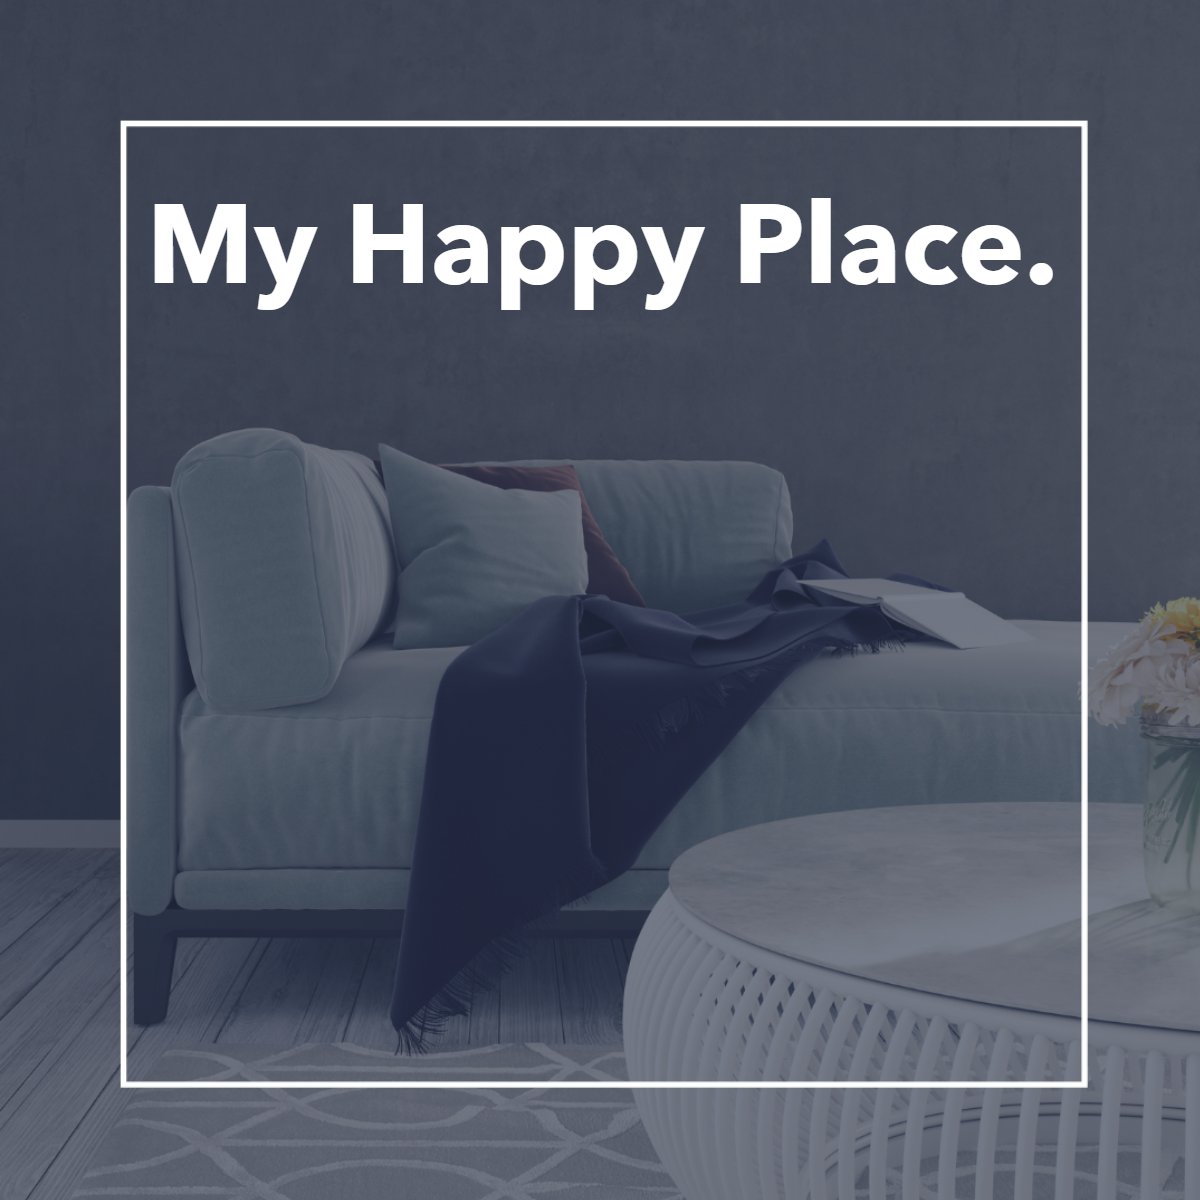 Home is my happy place. 🤗

#home #happyplace #homesweethome #homesofinstagram
 #realestate #realtor #dmv #dmvhomes #kindhomesnova #northernvirginia #loveloudoun #sterlingva #leesburgva #ashburnva #fairfaxva #loco #chantillyva #viennava #restonva #herndonva #oaktonva